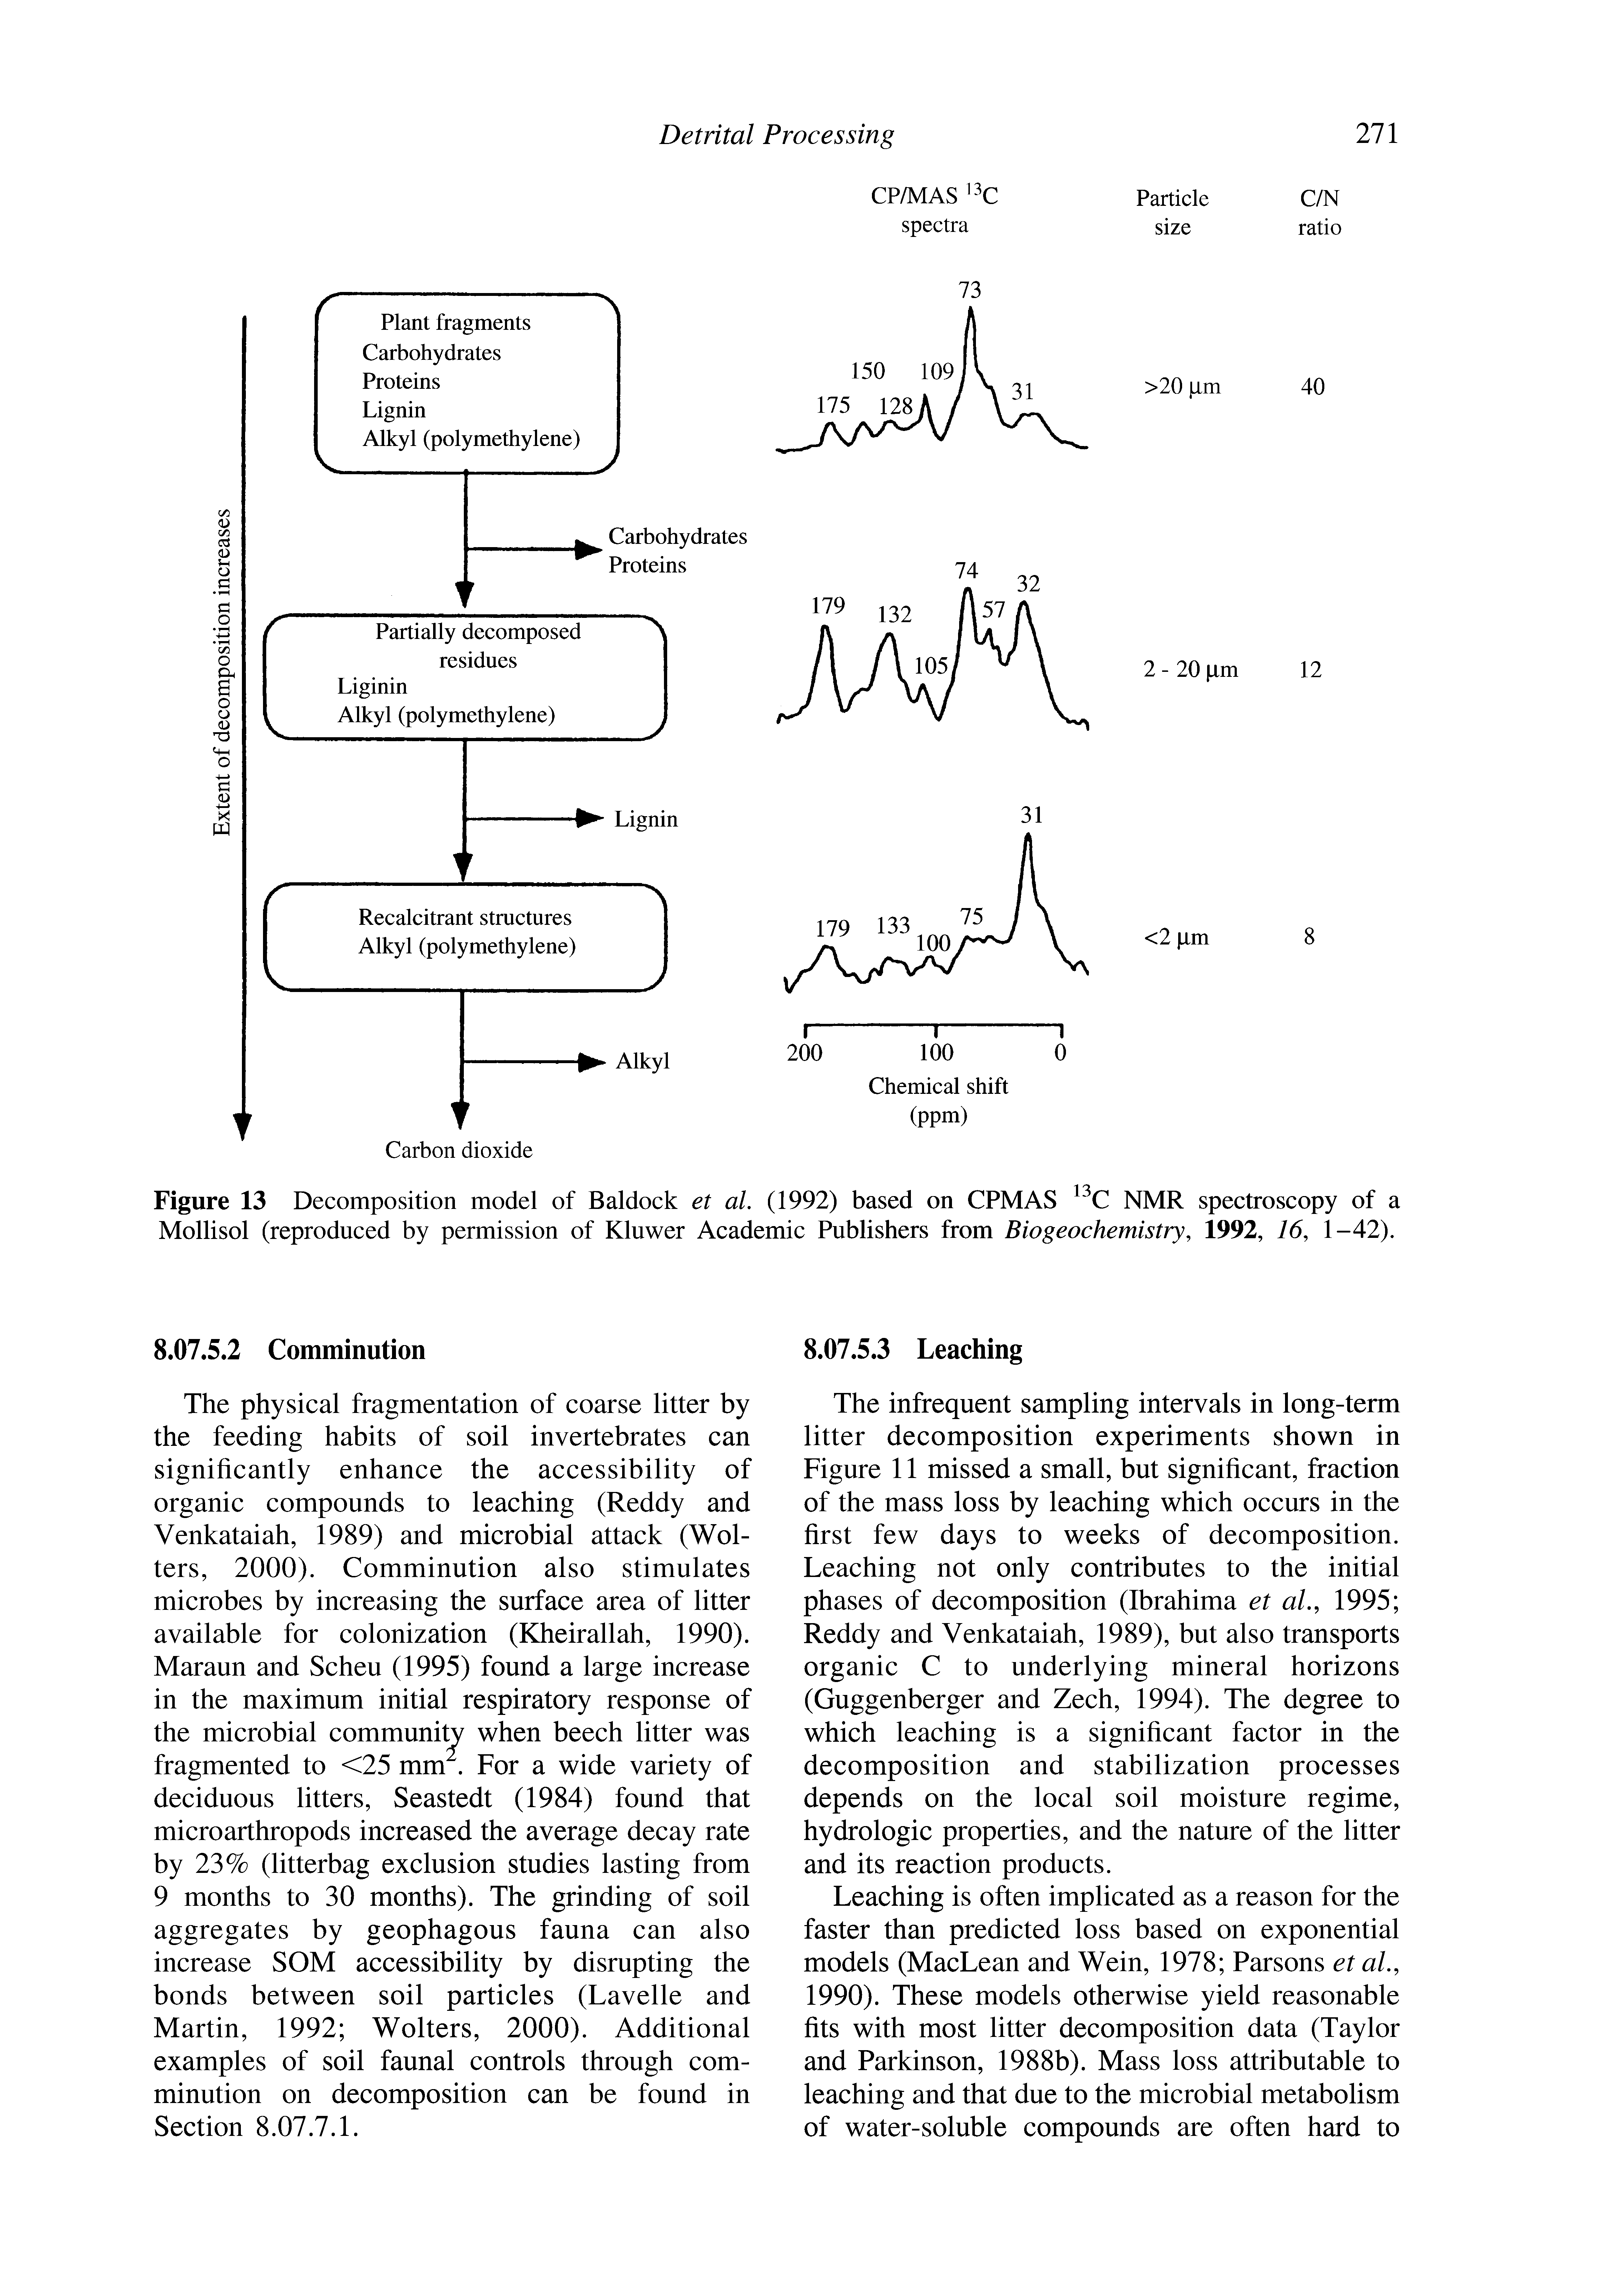 Figure 13 Decomposition model of Baldock et al. (1992) based on CPMAS NMR spectroscopy of a Mollisol (reproduced by permission of Kluwer Academic Publishers from Biogeochemistry, 1992, 16, 1-42).